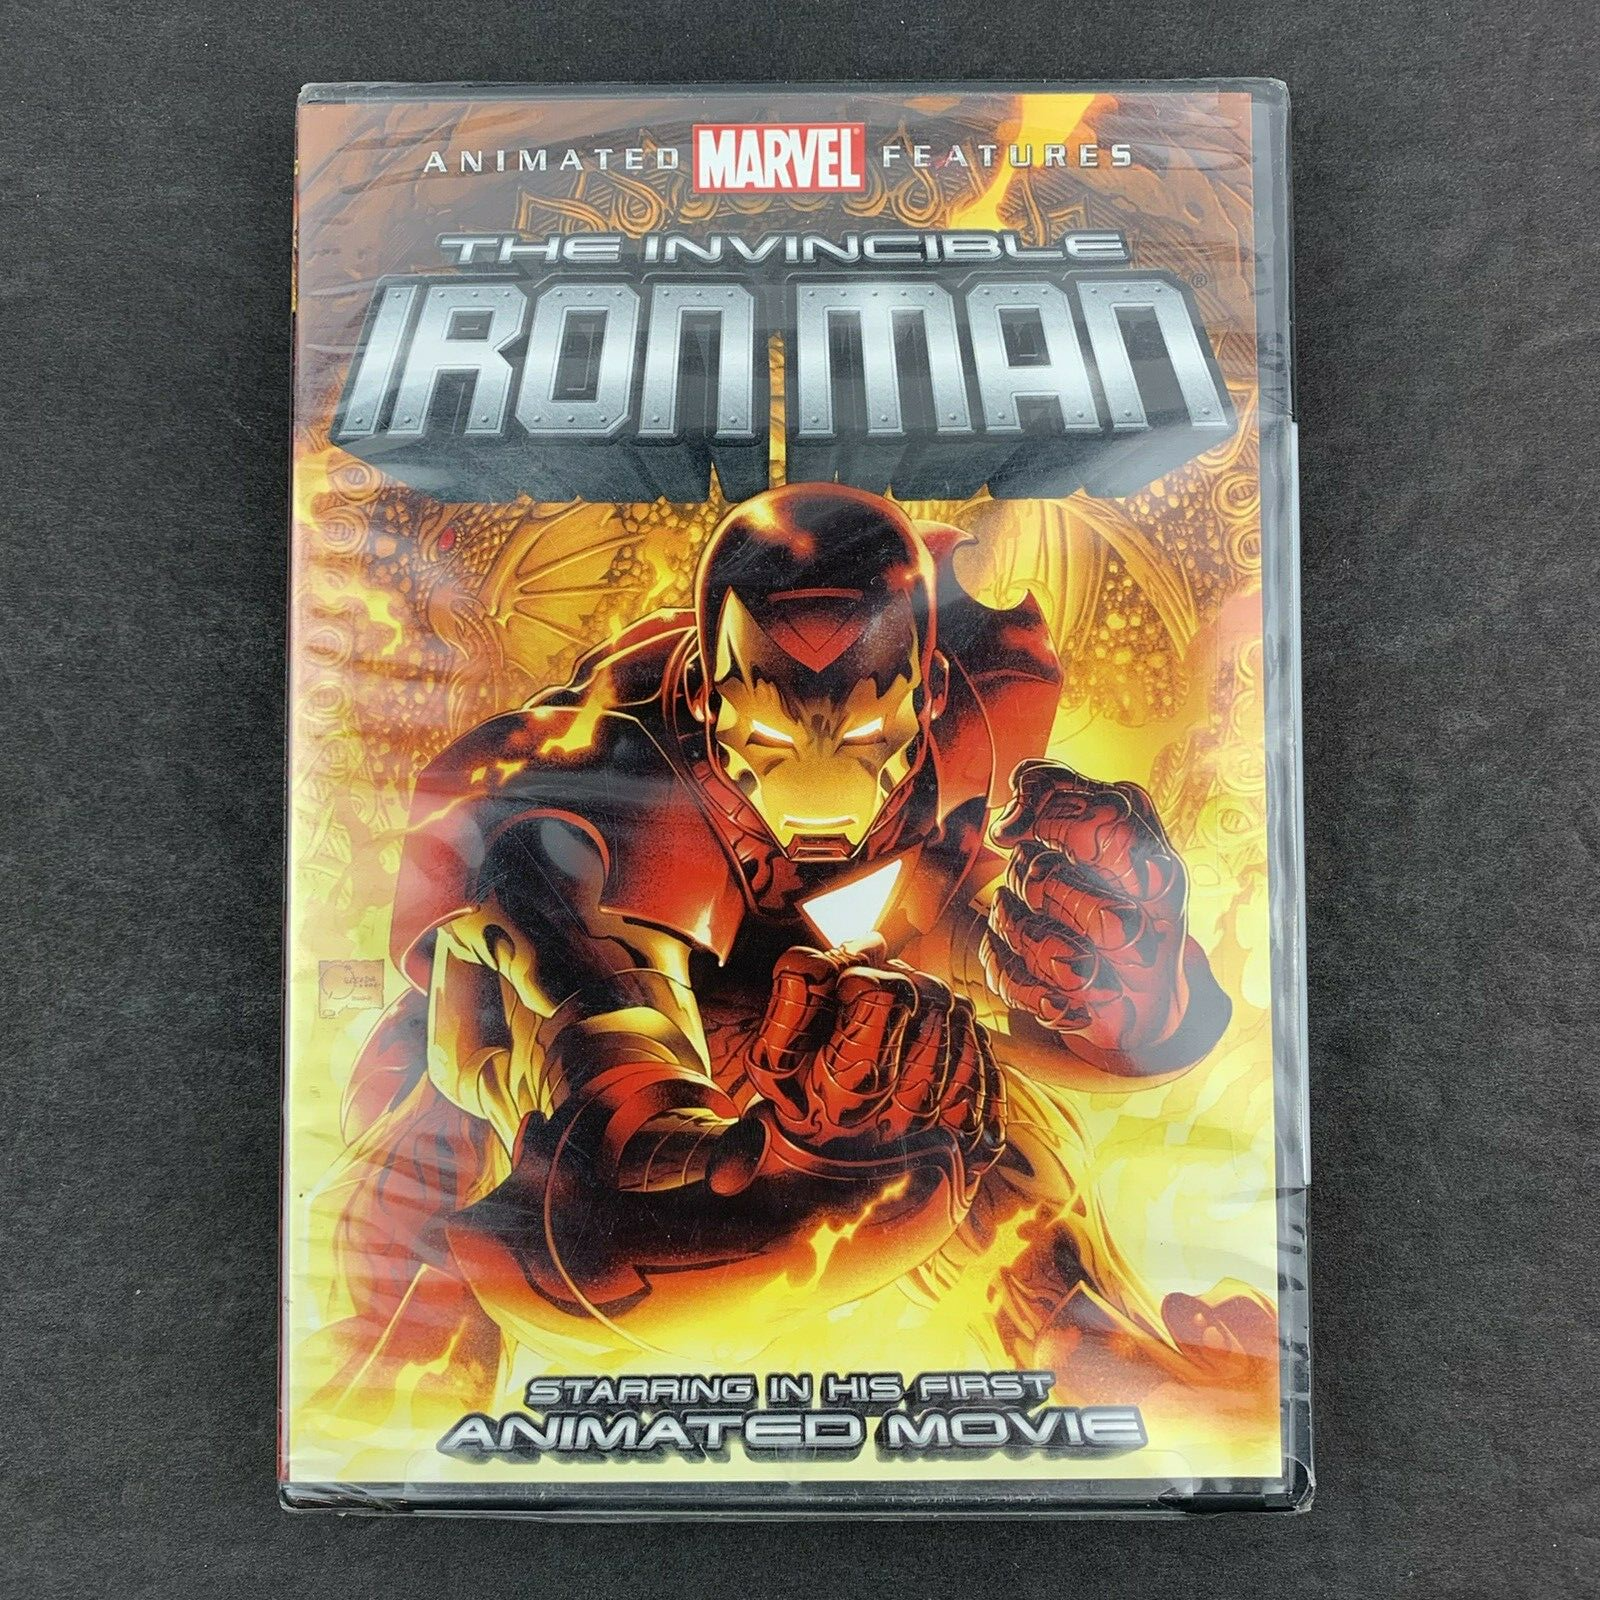 Marvel The Invincible Iron Man Animated Movie DVD - New Sealed 31398207481  | eBay